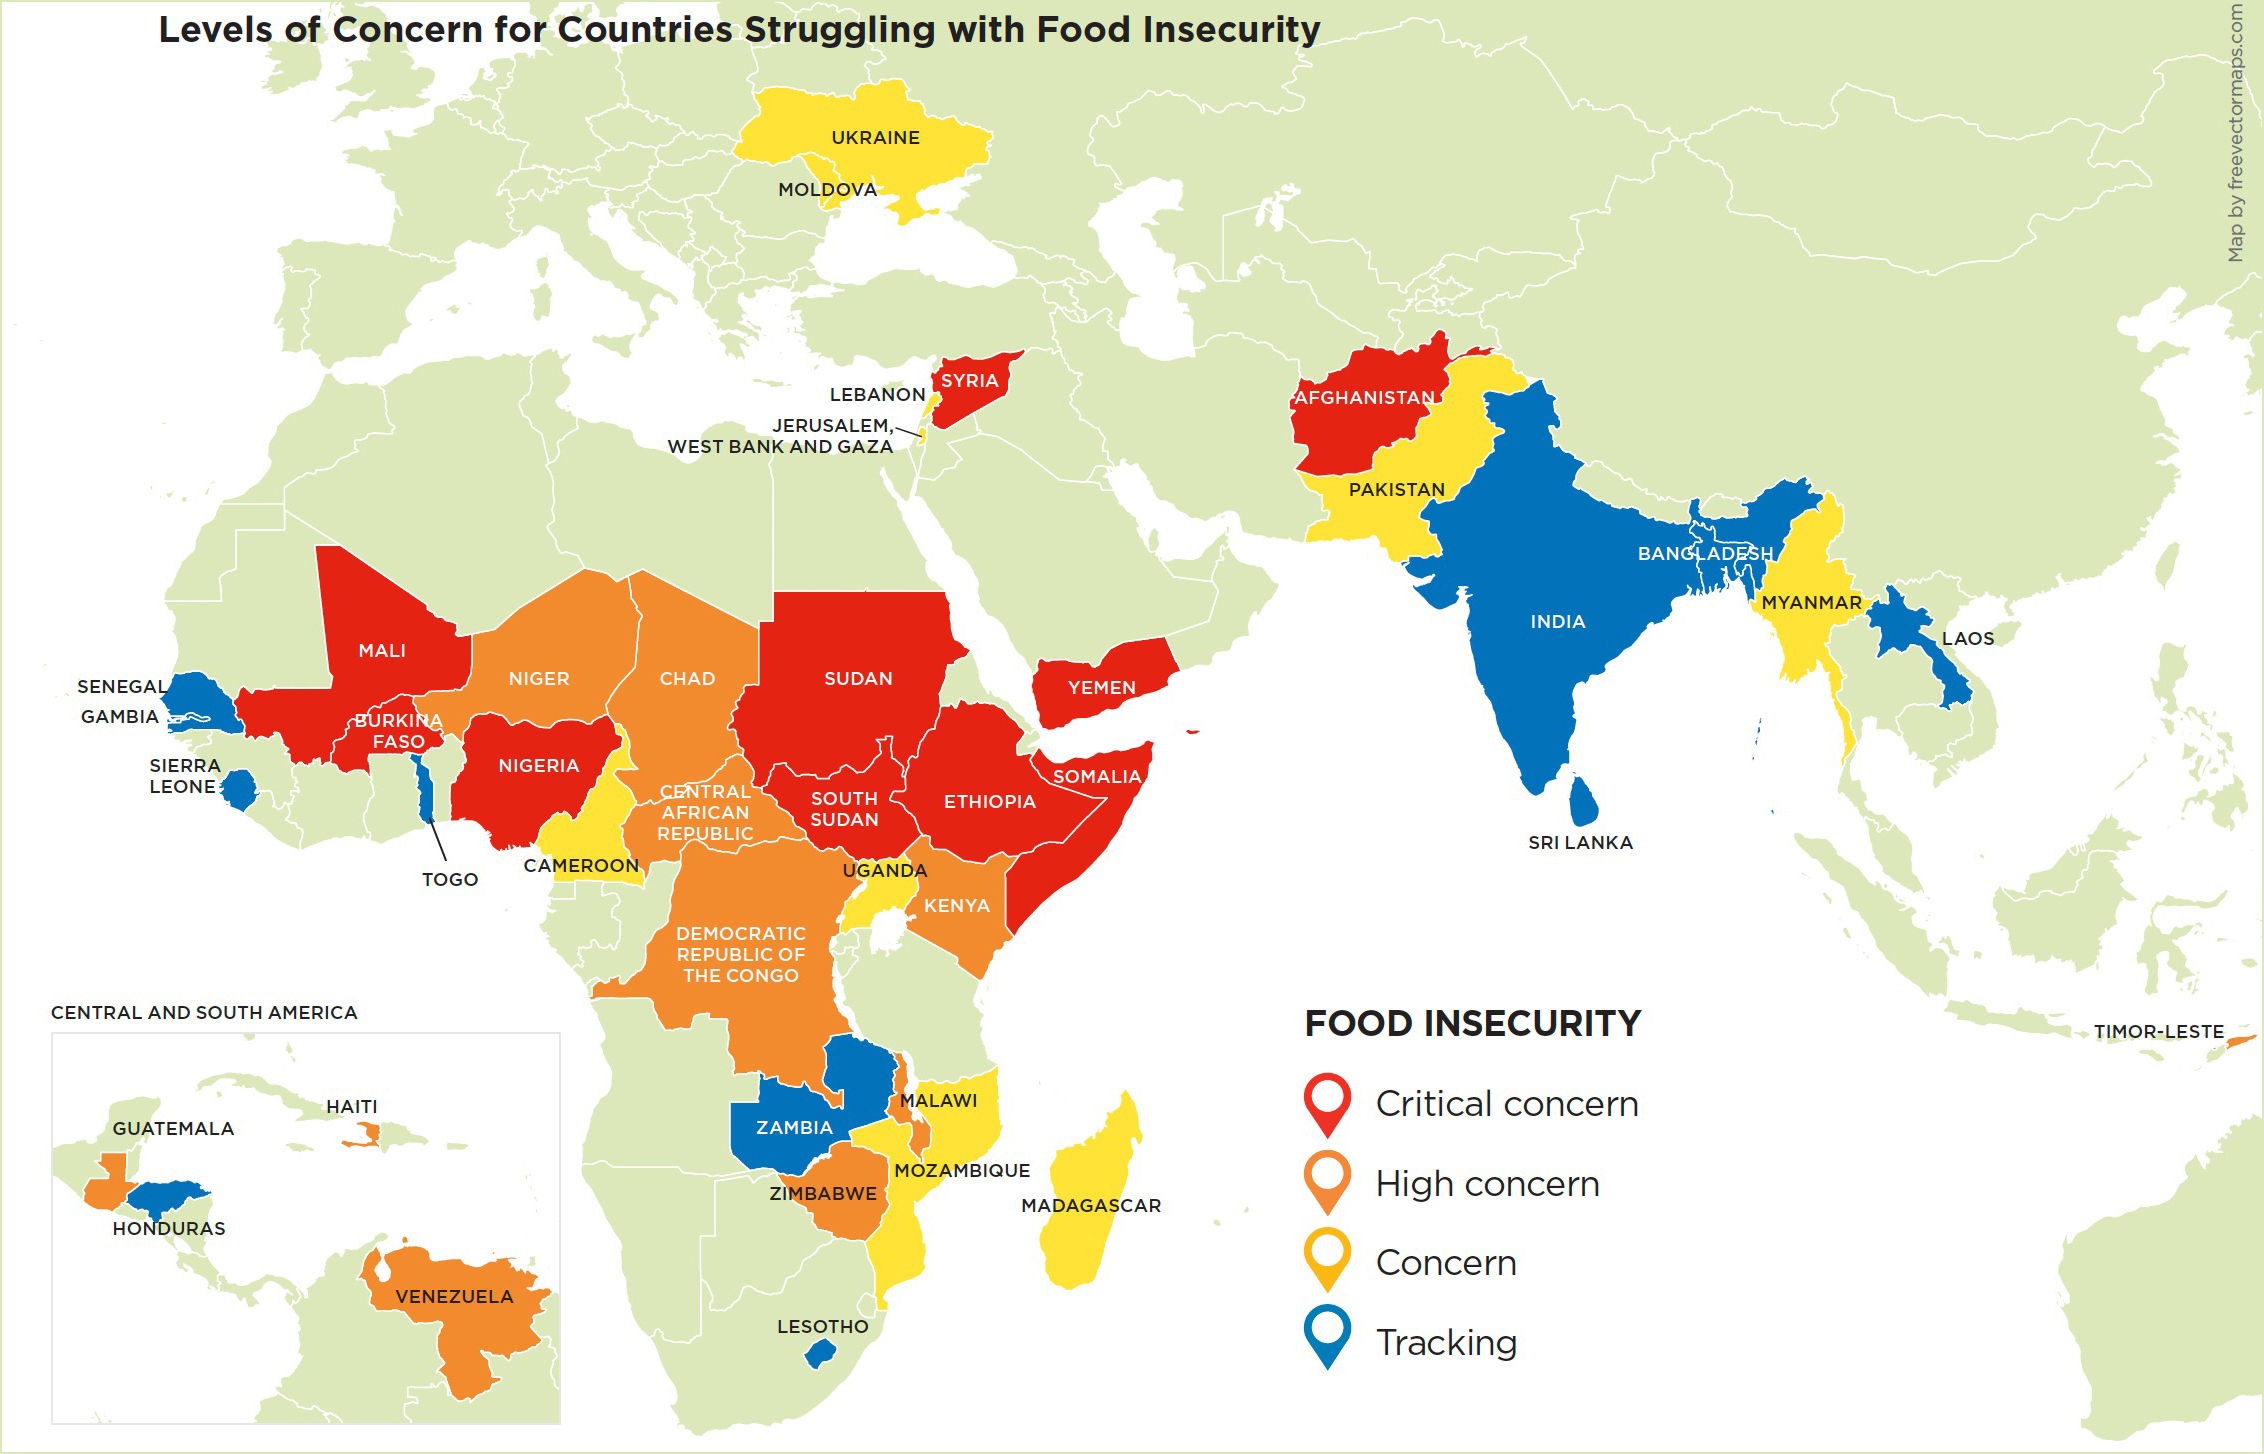 World hunger in east africa